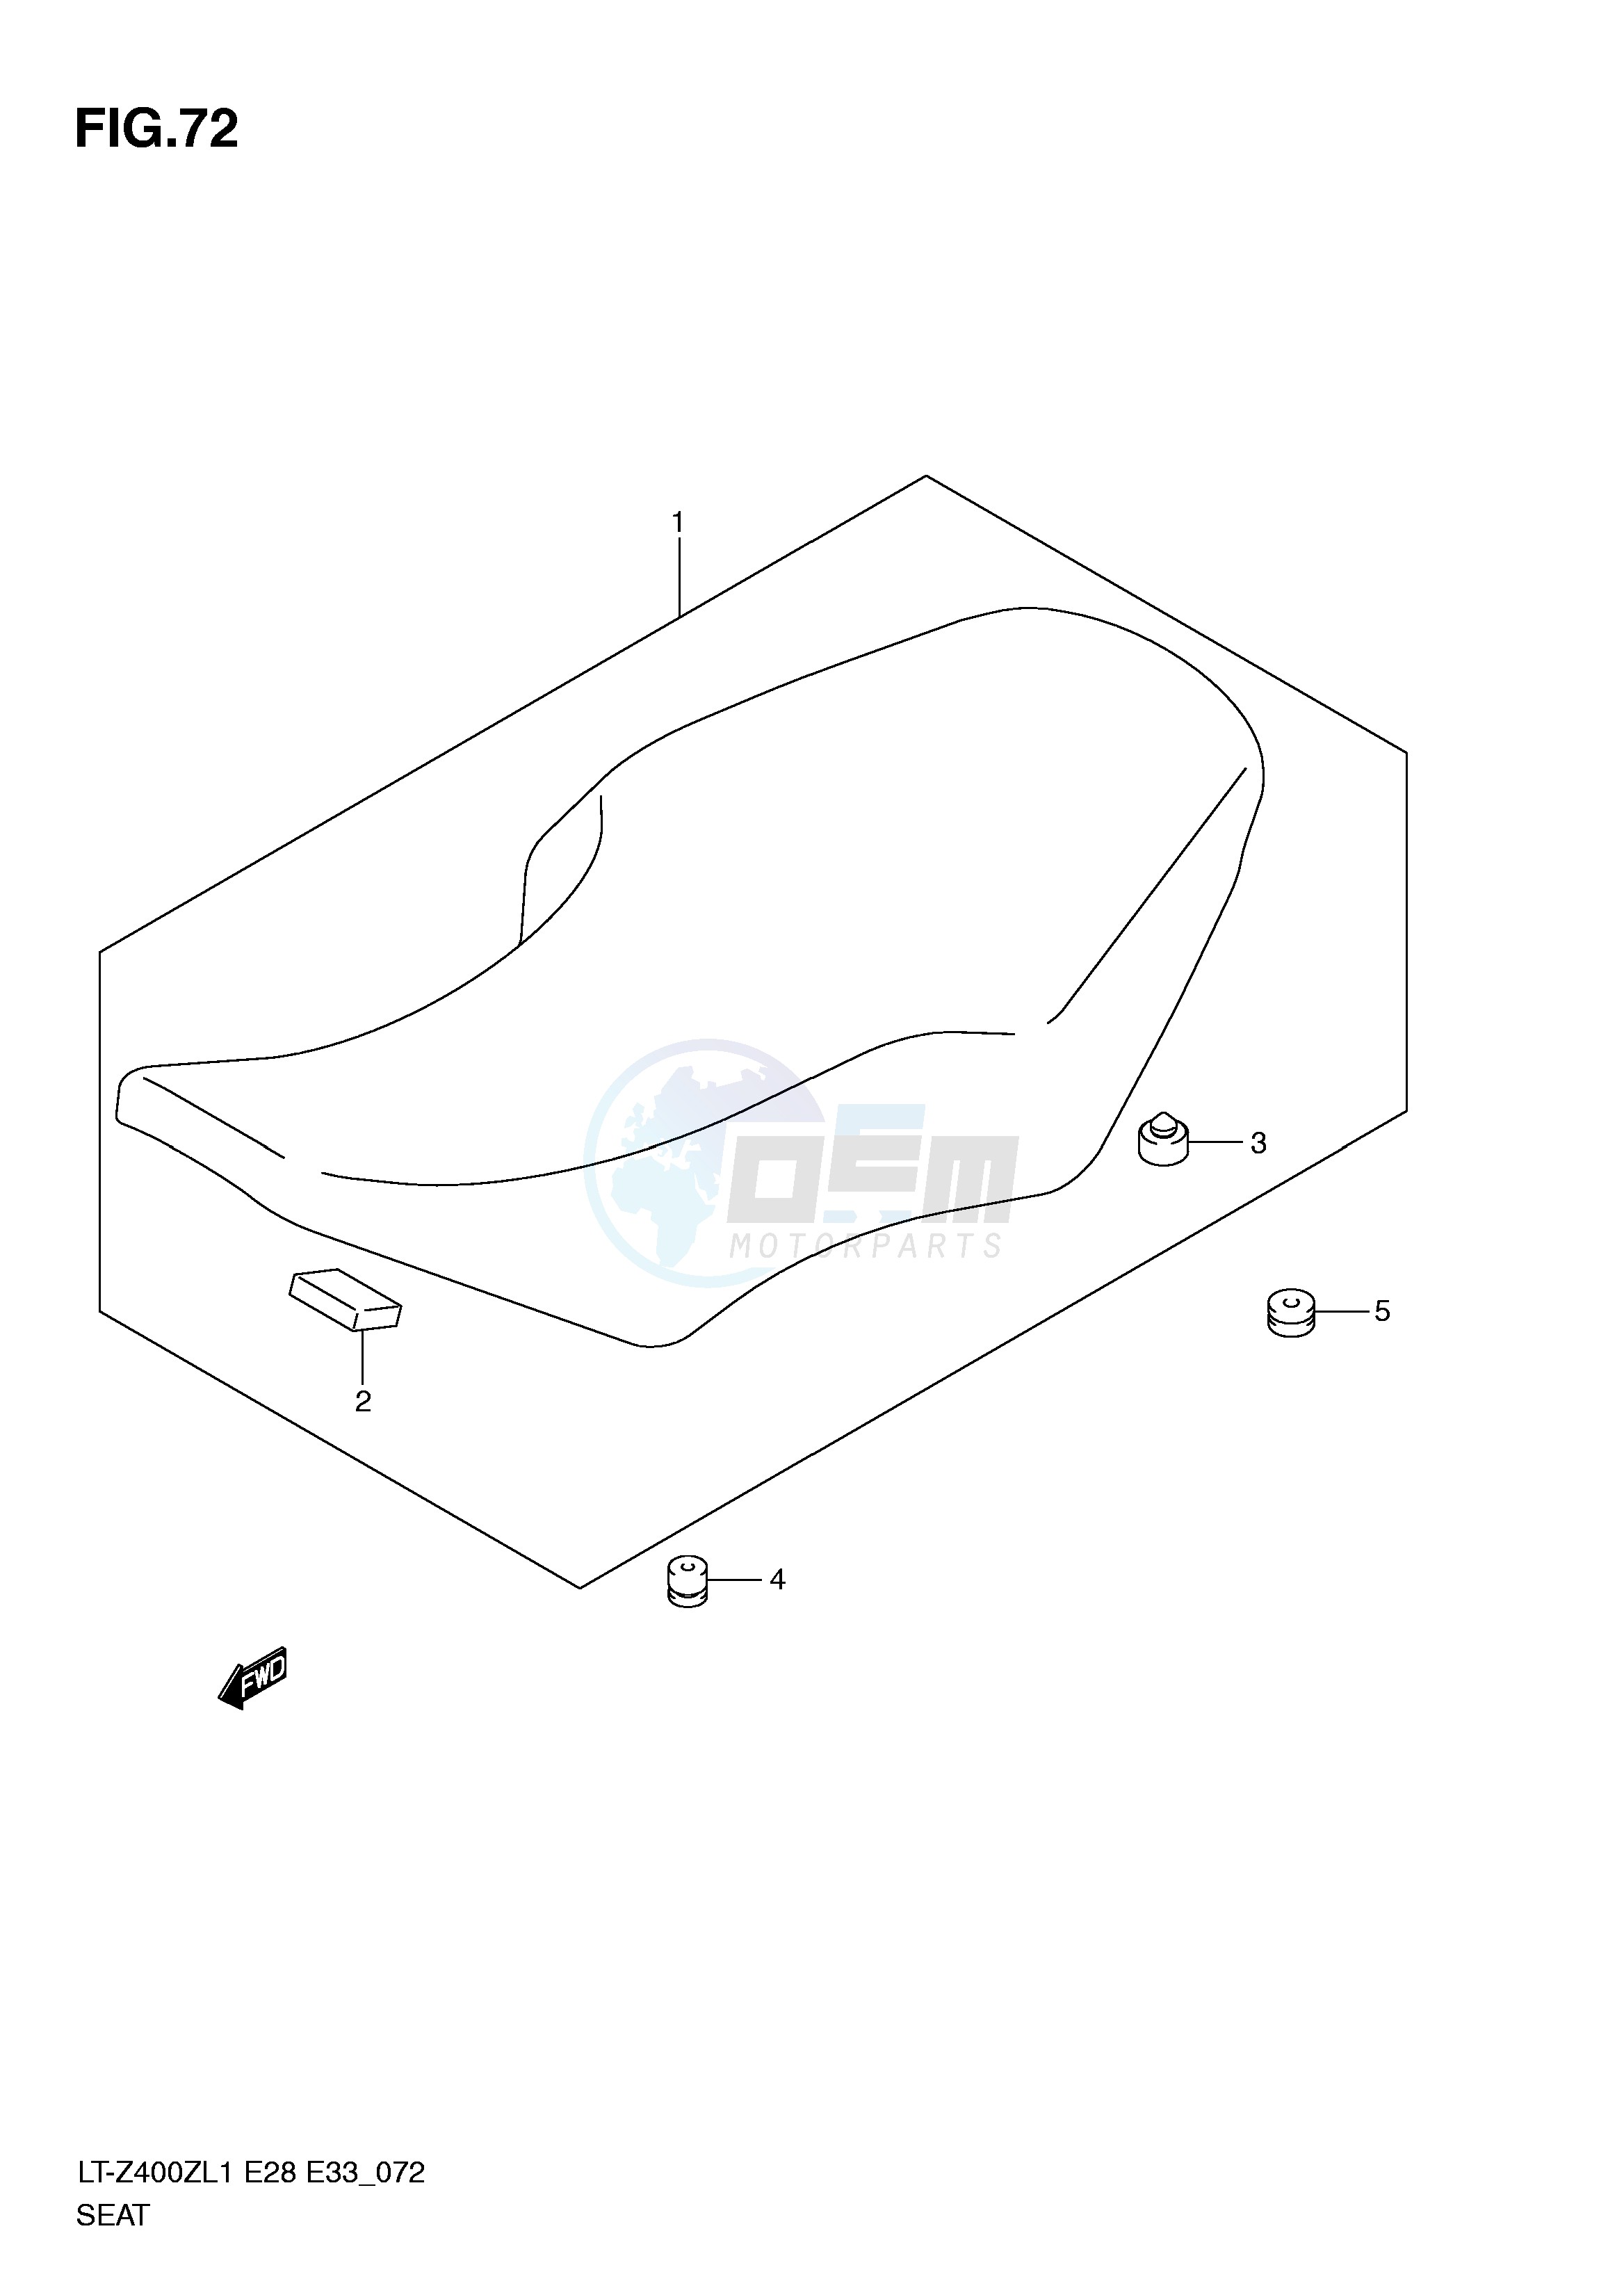 SEAT (LT-Z400L1 E28) blueprint